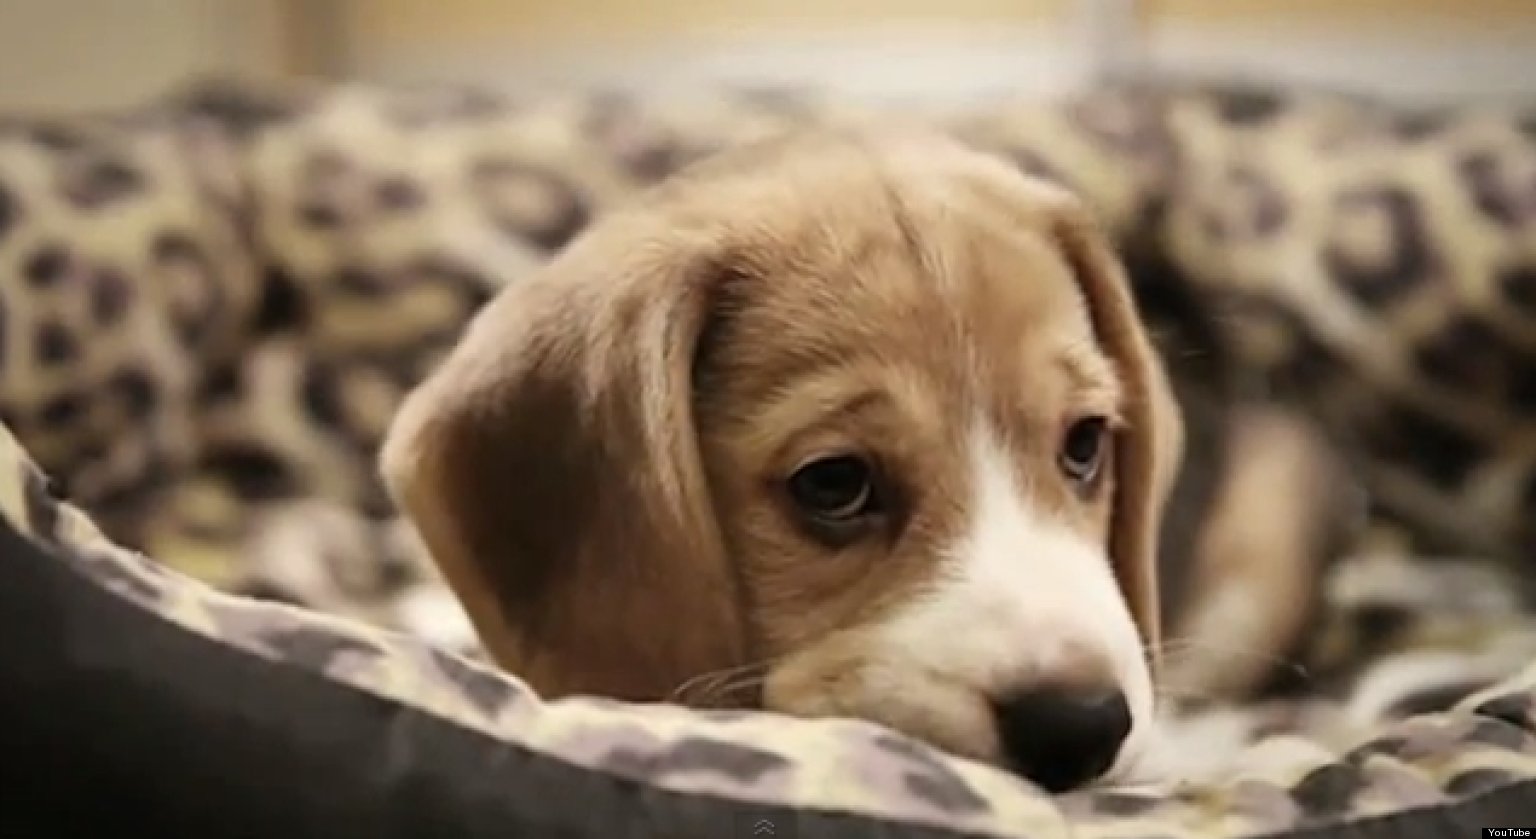 Sad Dog Diary By Ze Frank (VIDEO)